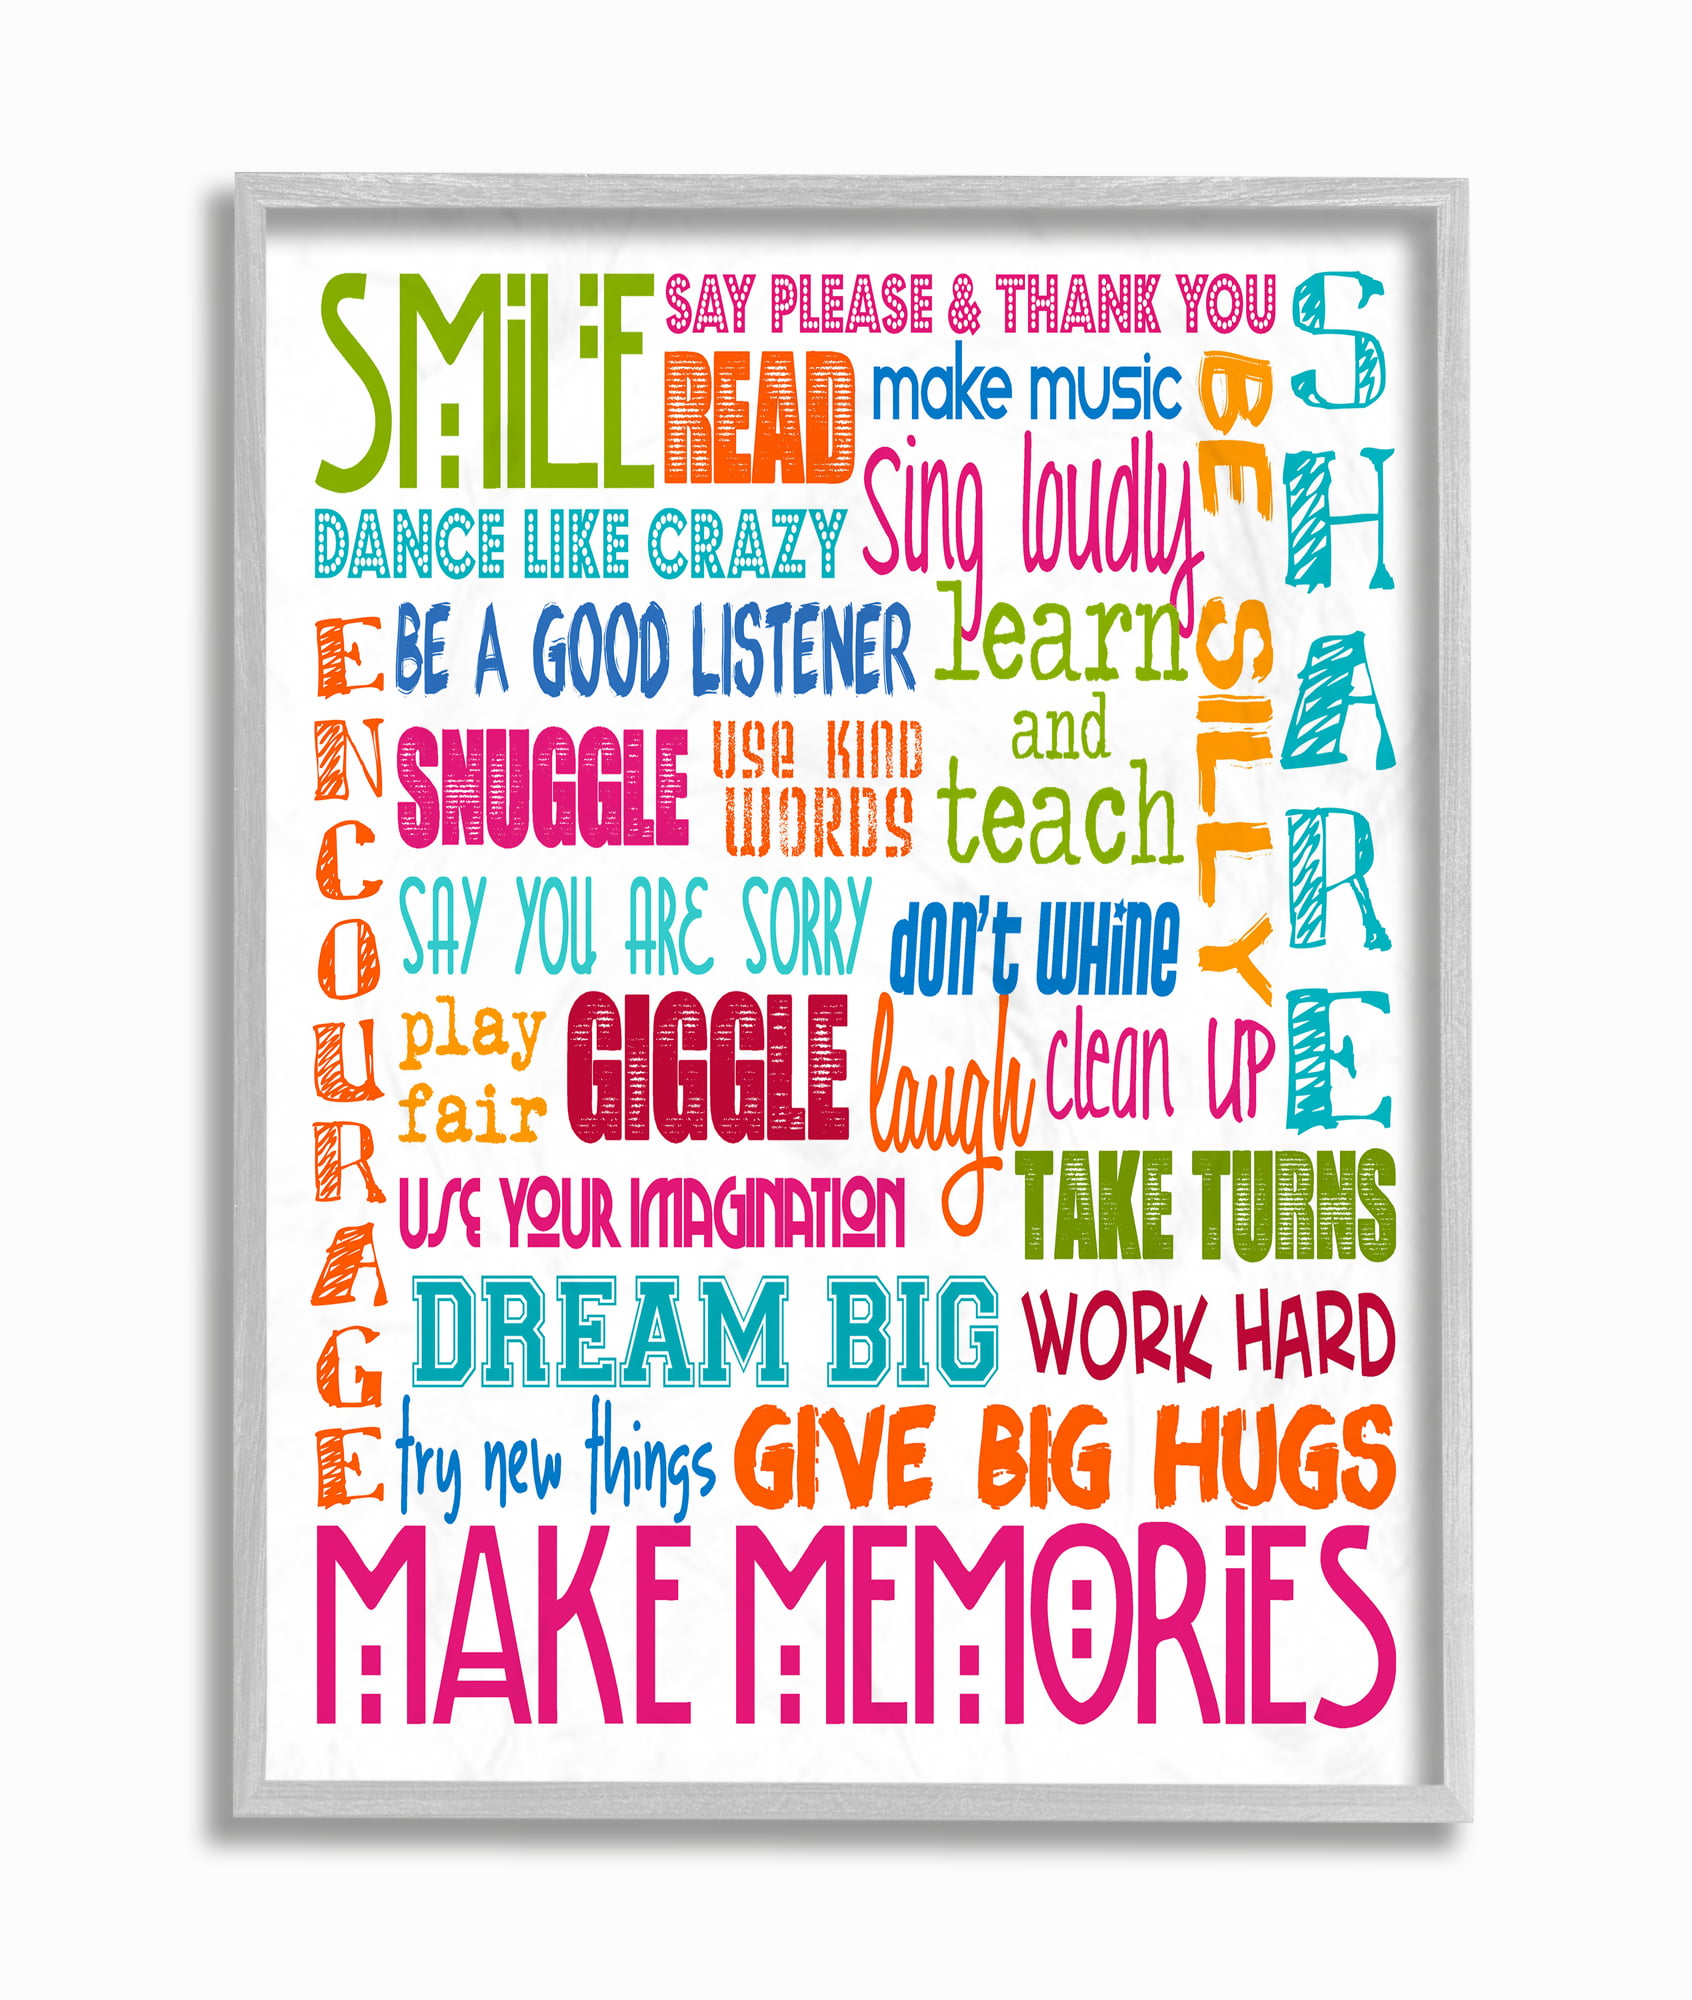 Design by Artist Erica Billups Stupell Industries Smile Make Memories Rainbow Wall Plaque 13 x 19 